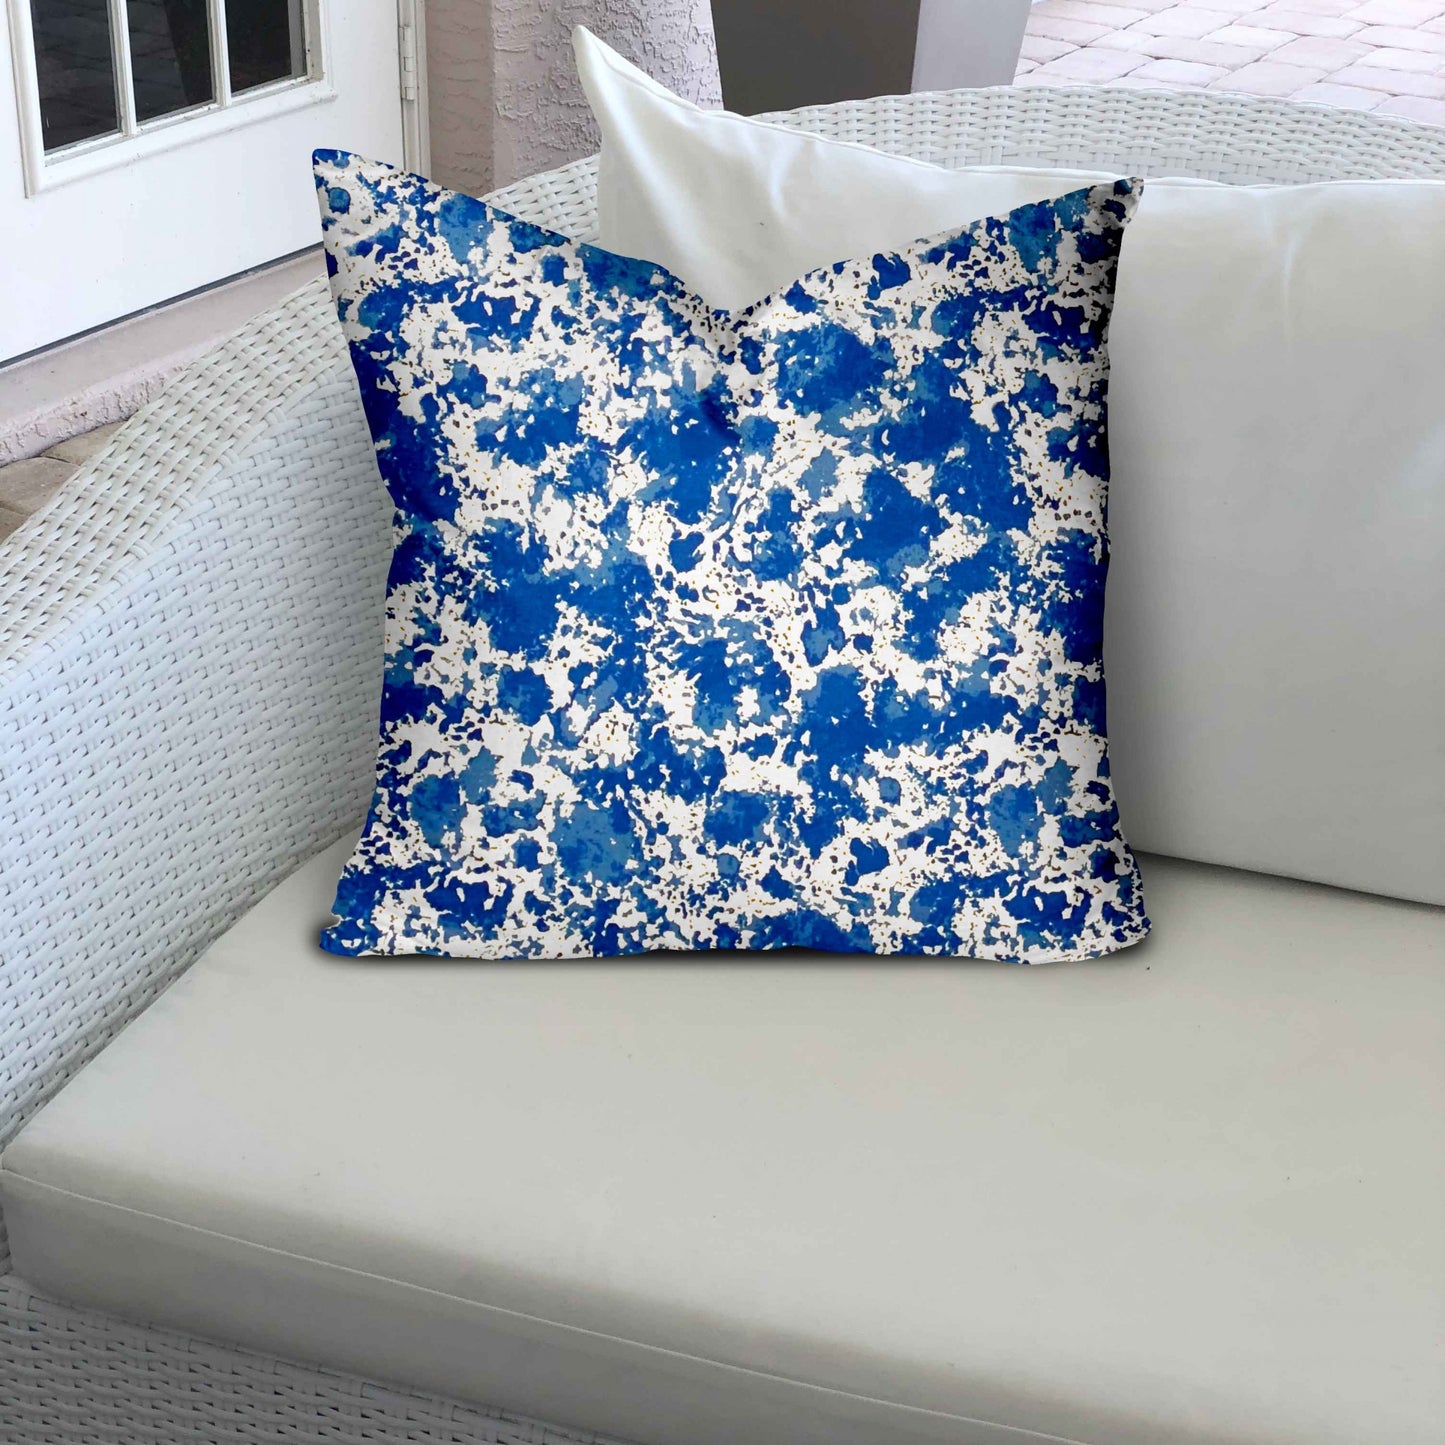 16" X 16" Blue And White Blown Seam Coastal Throw Indoor Outdoor Pillow